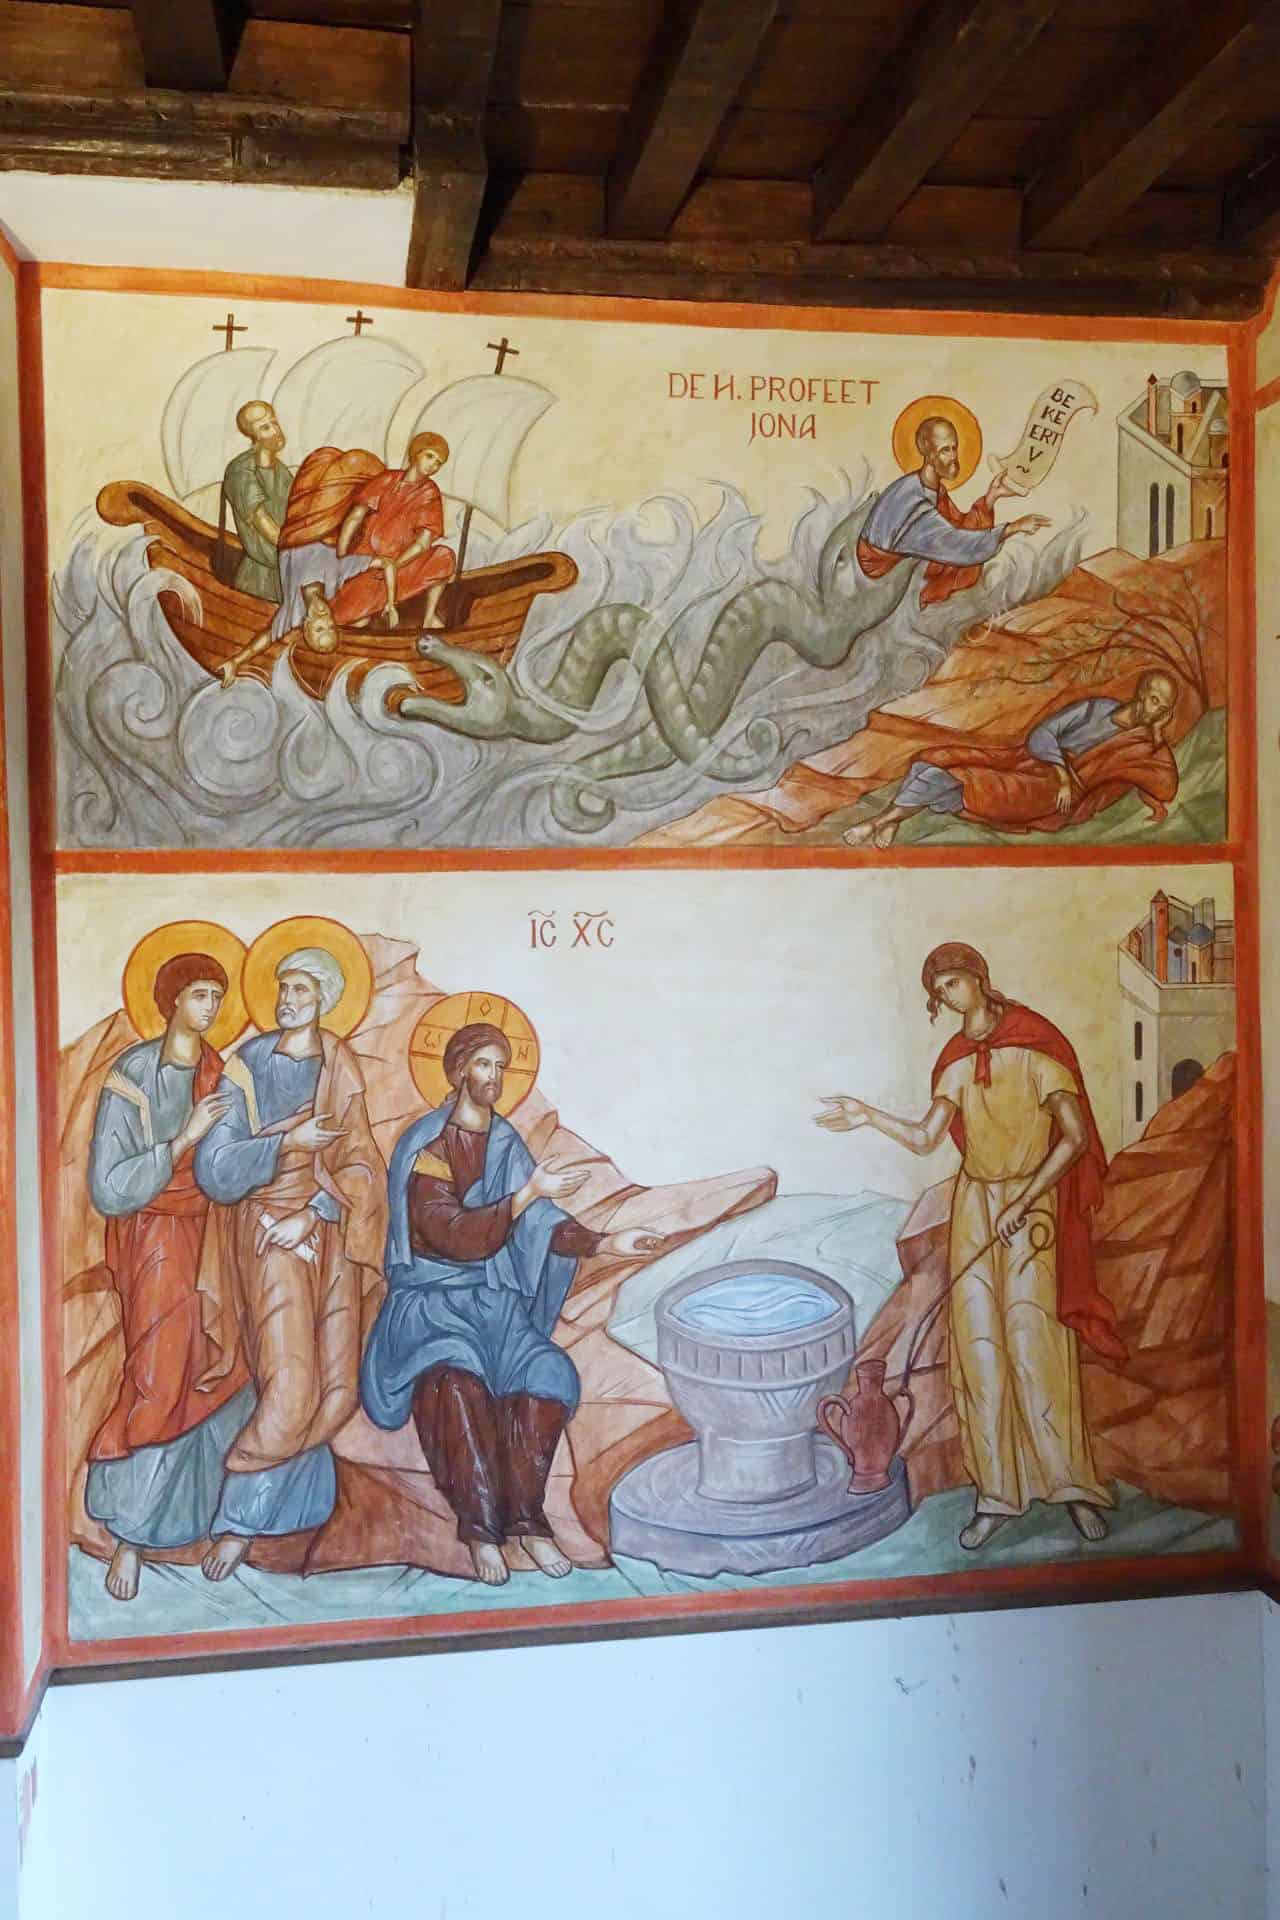 Story of Jonah and the Samaritan woman